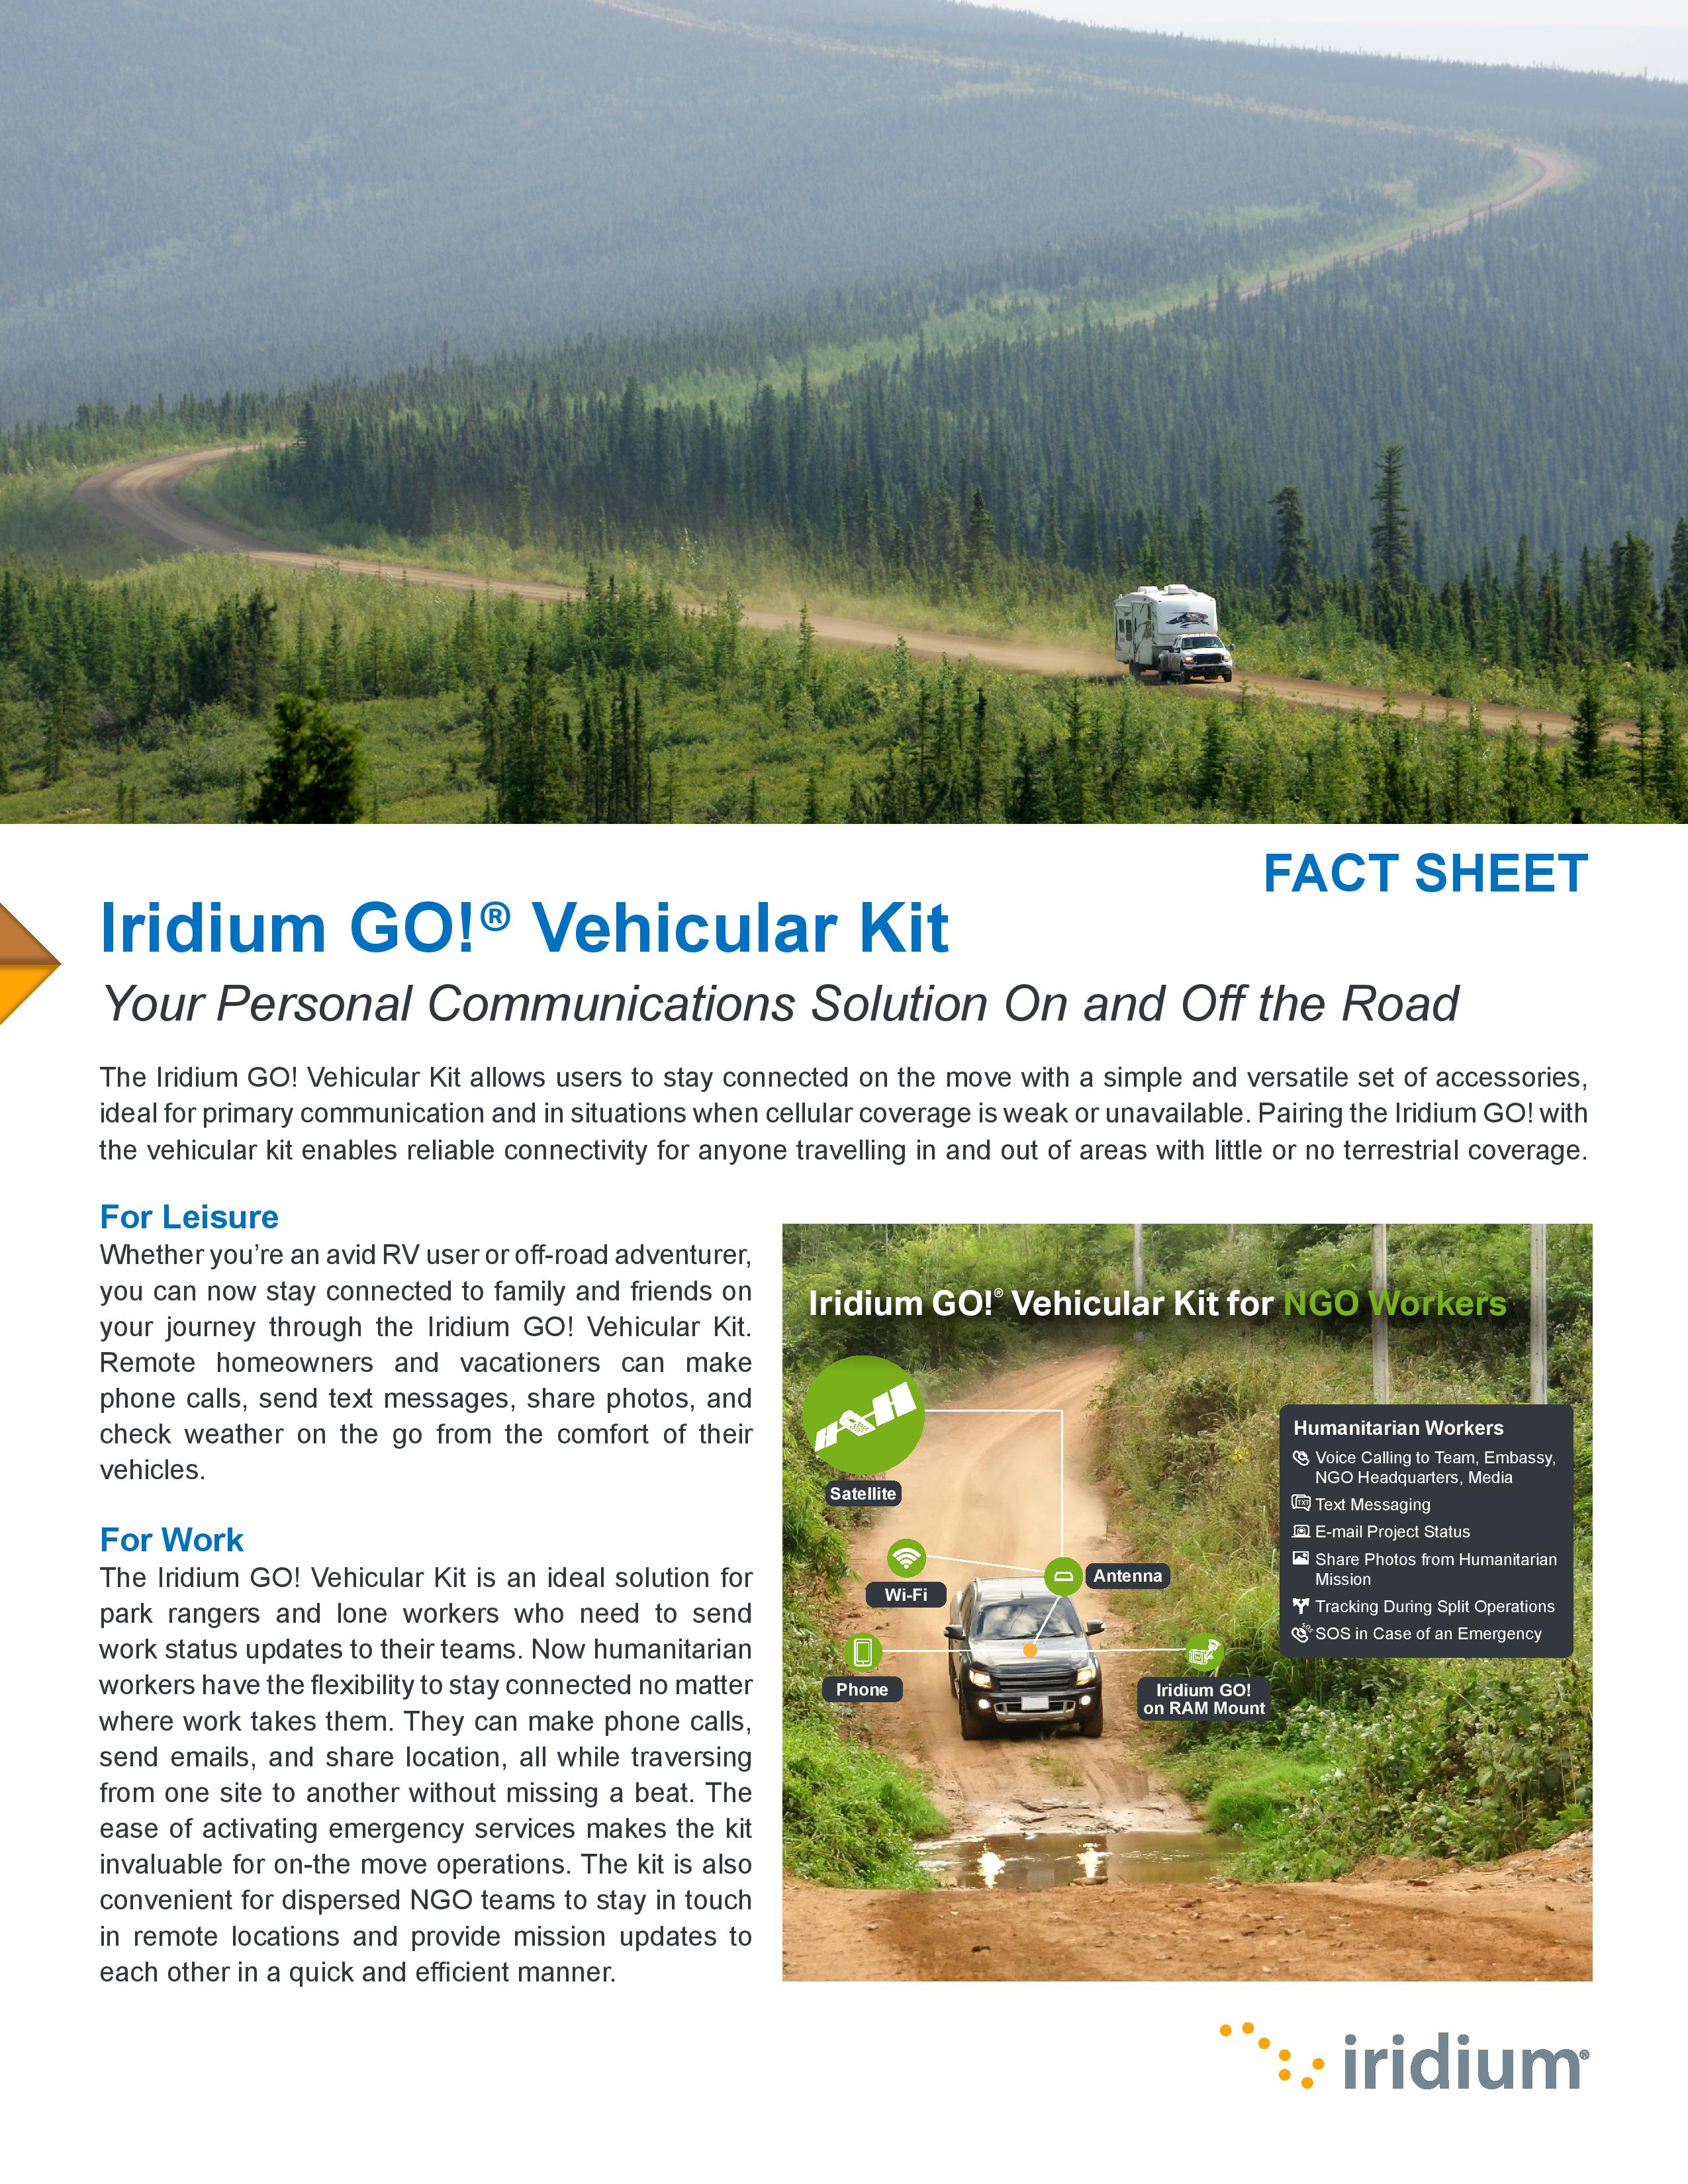 FS_Iridium_GO__Vehicular_Kit_Fact_Sheet_May_2021__1_-page-001.jpg